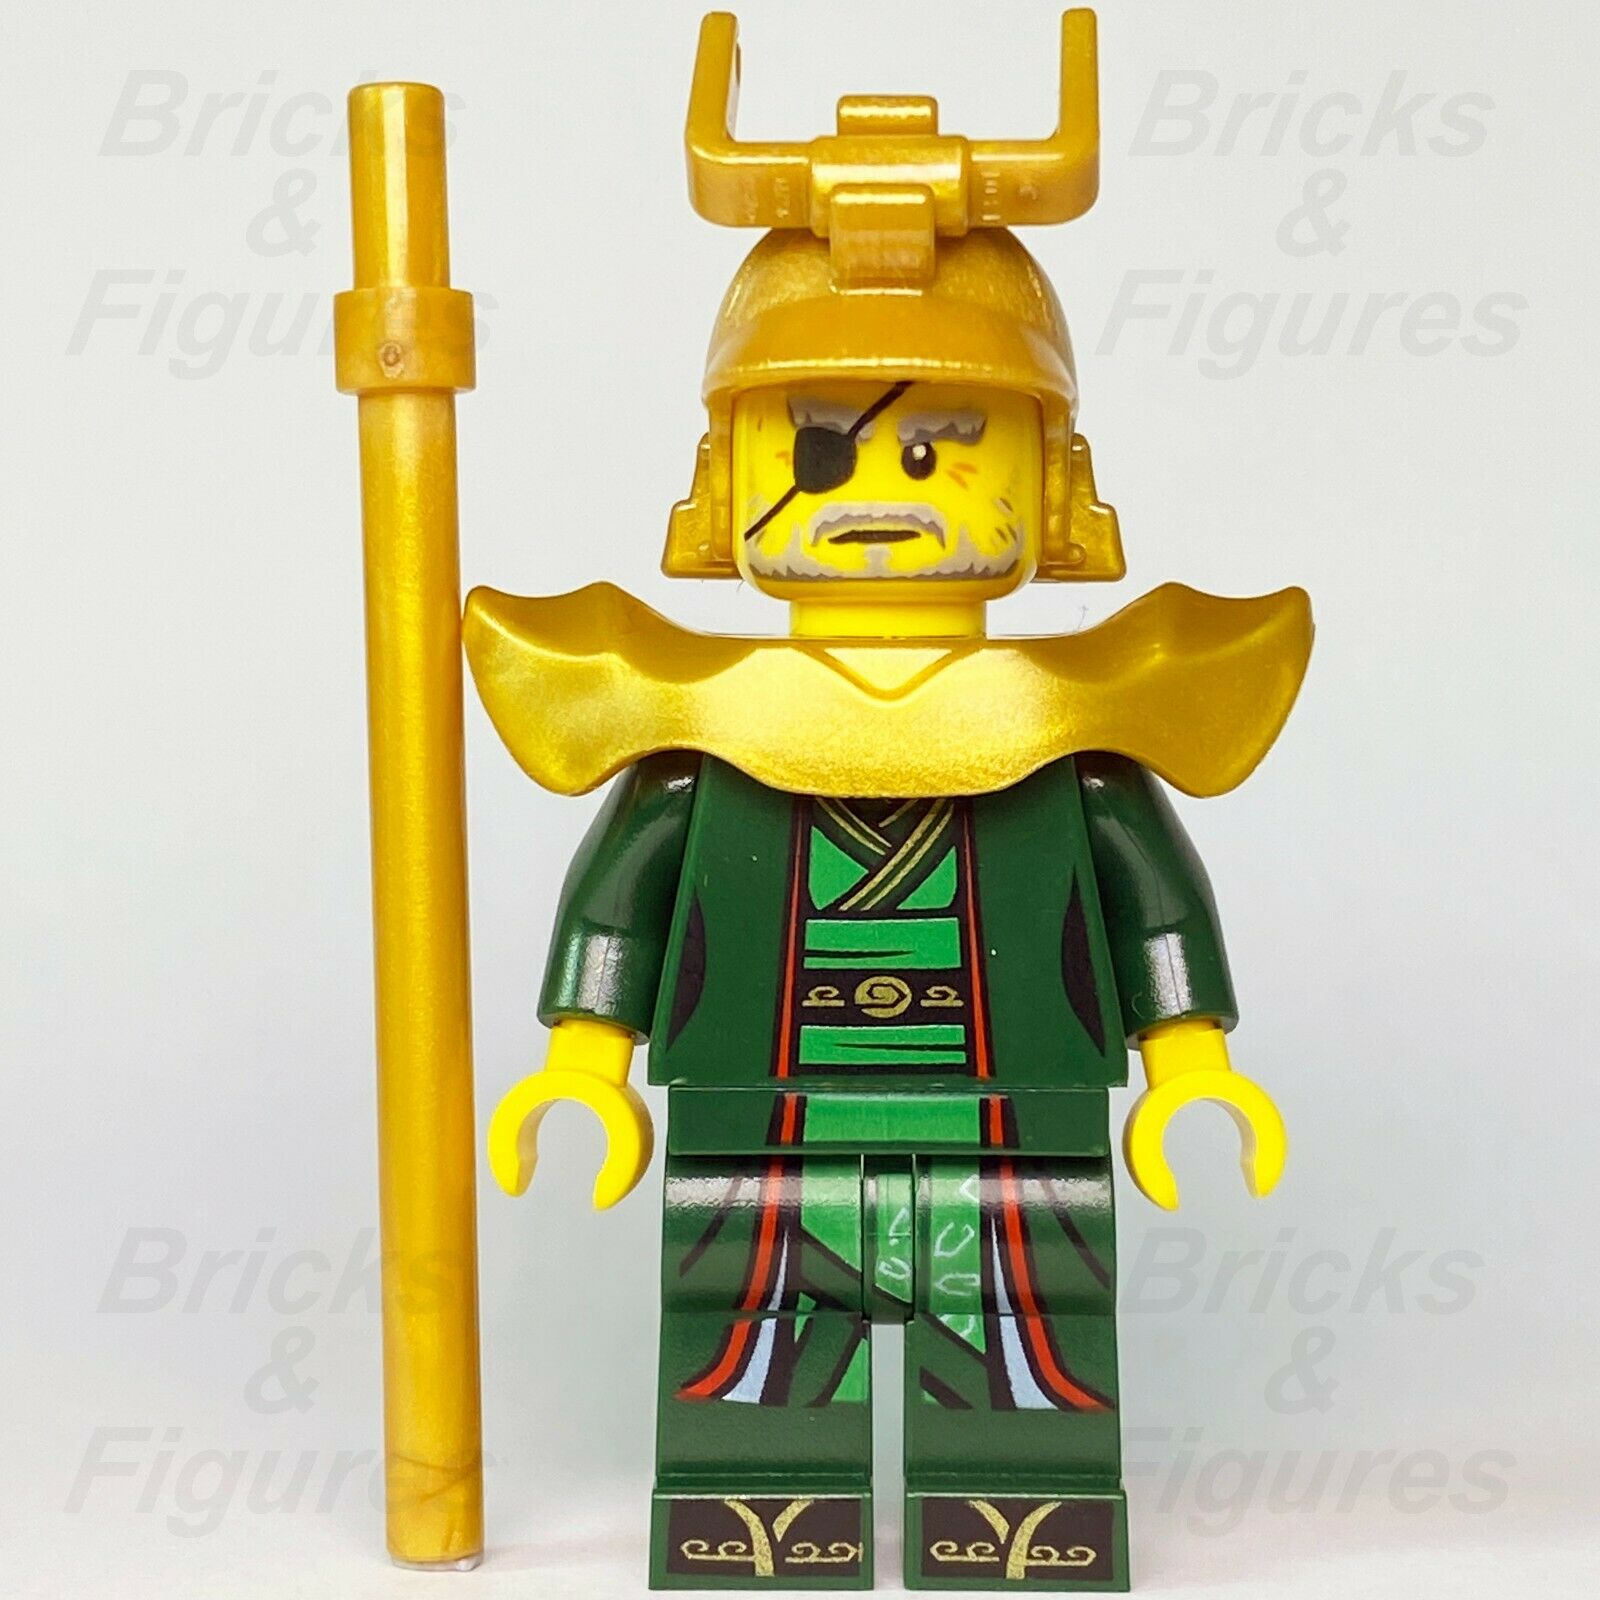 New Ninjago LEGO Hutchins Sons of Garmadon Royal Minifigure from set 70643 - Bricks & Figures